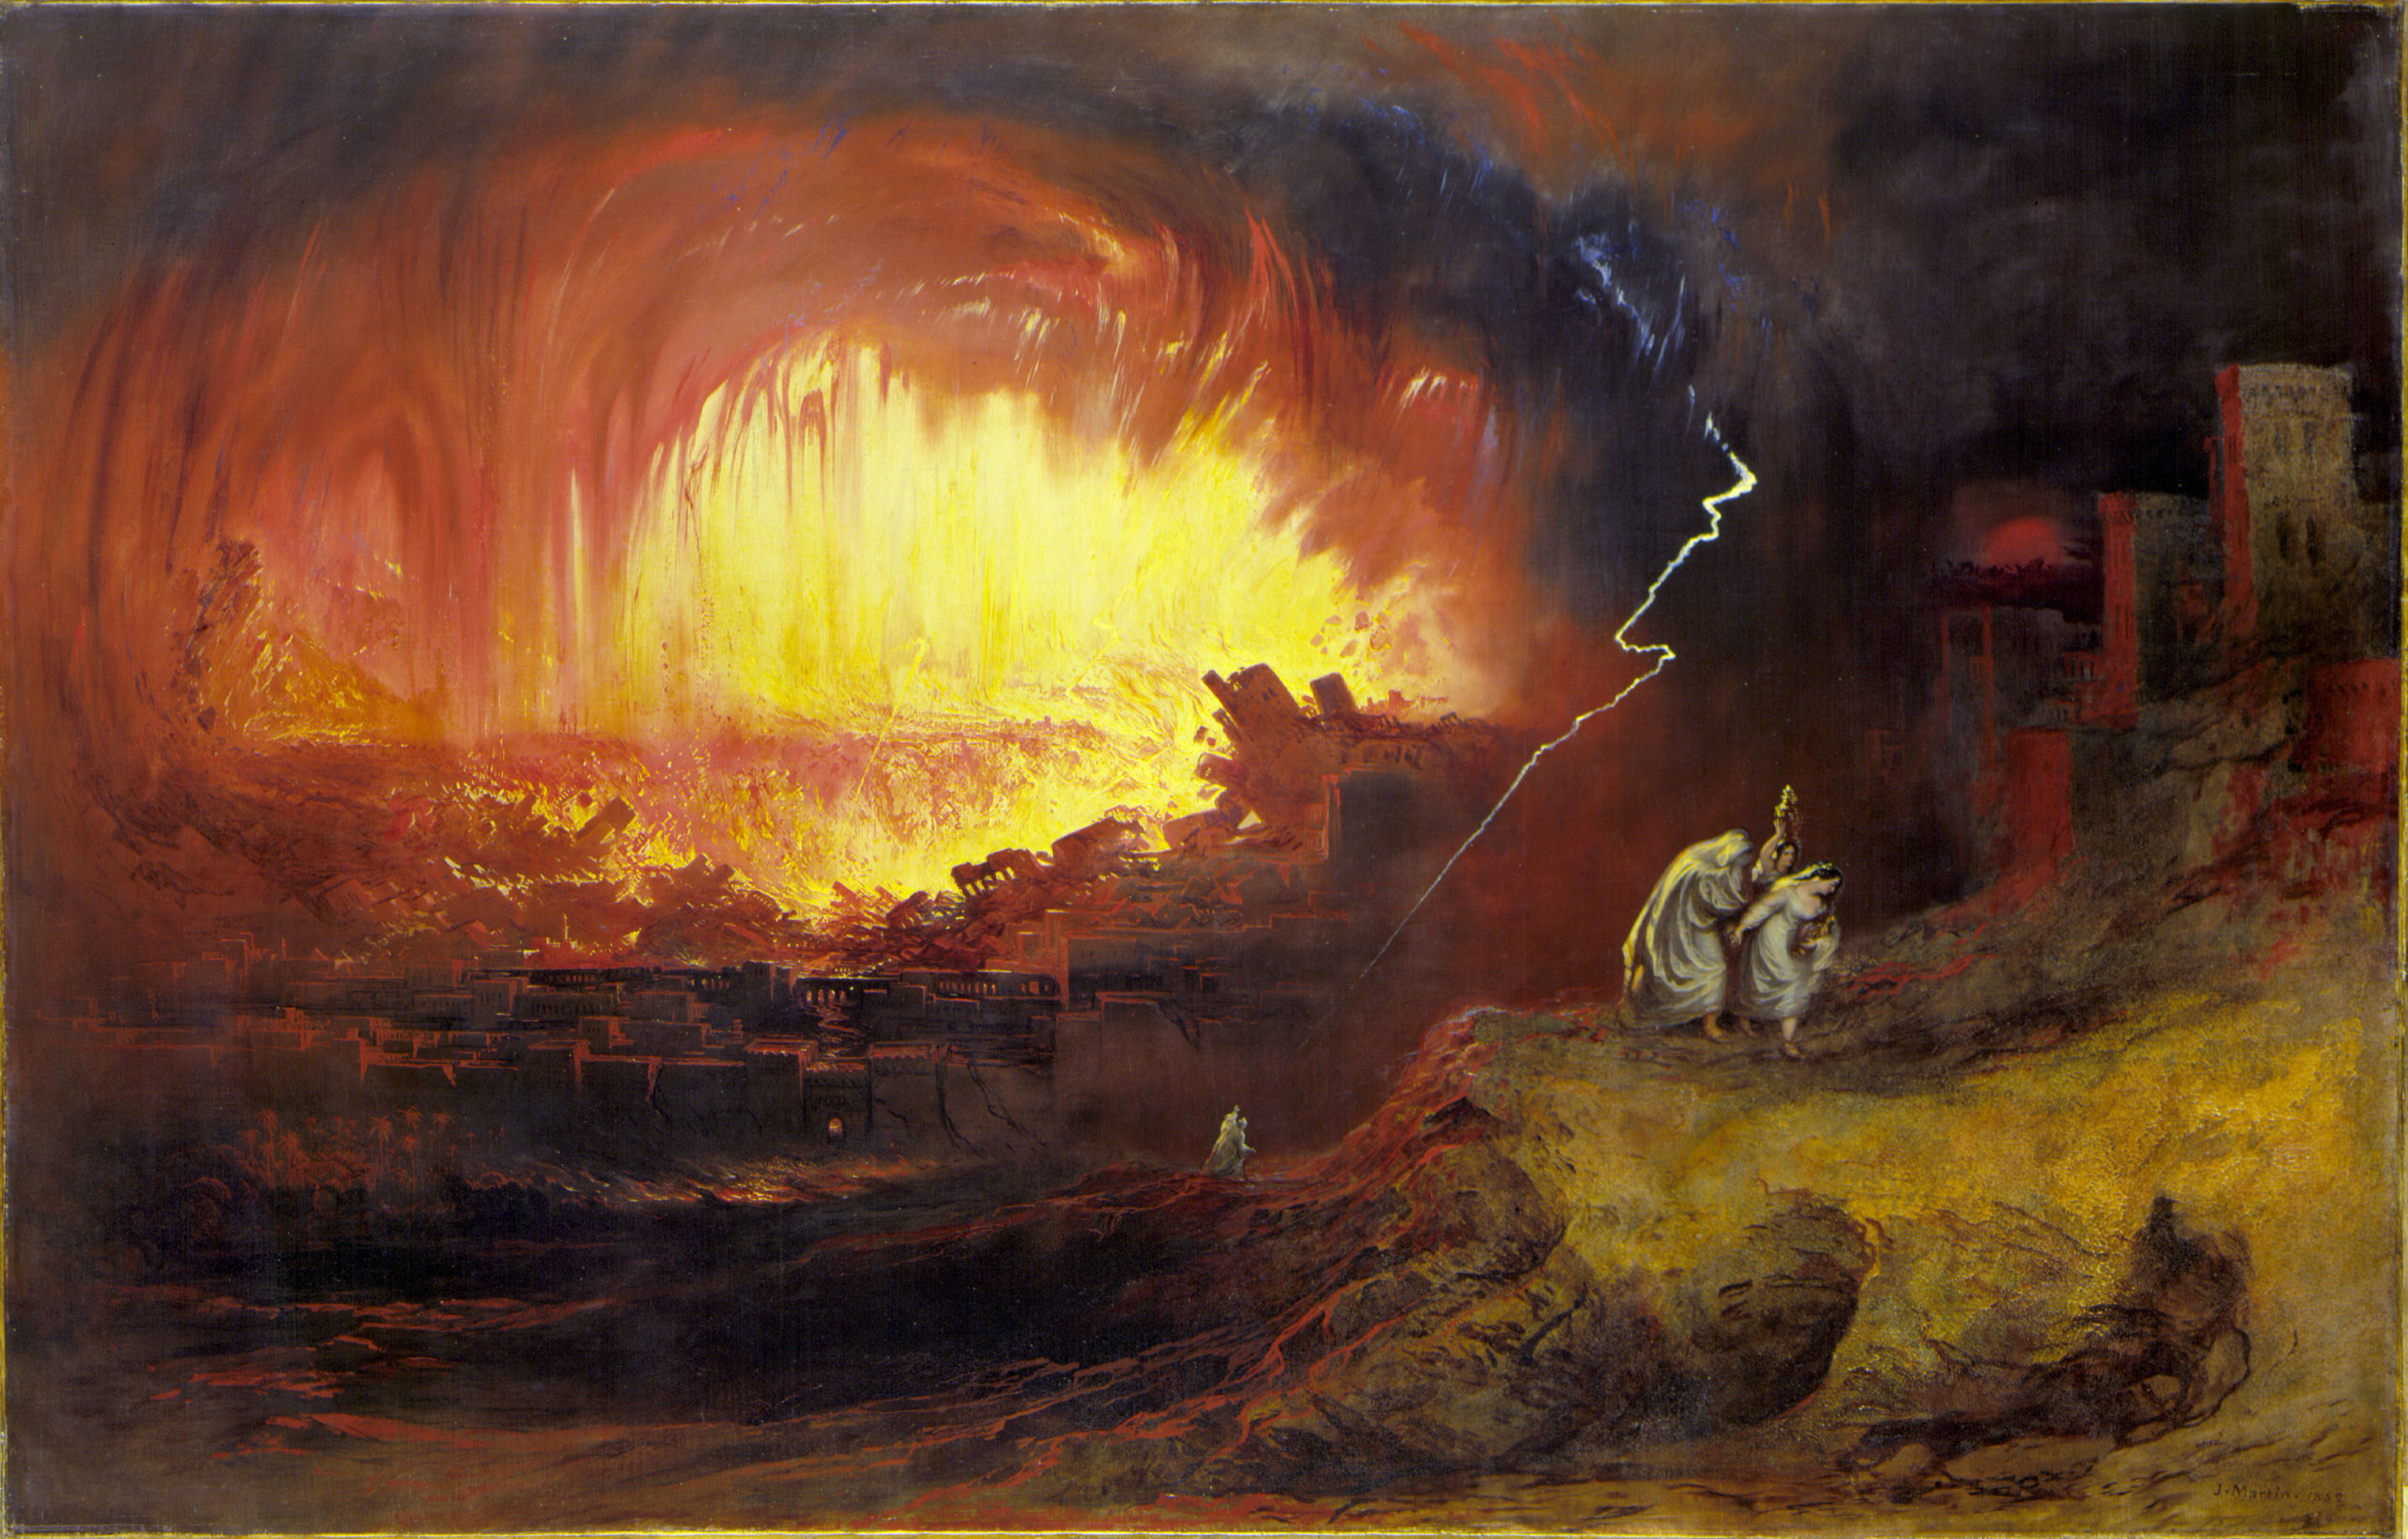 The Destruction of Sodom and Gomorrah by John Martin - 1852 - 136.3 x 212.3 cm Laing Art Gallery